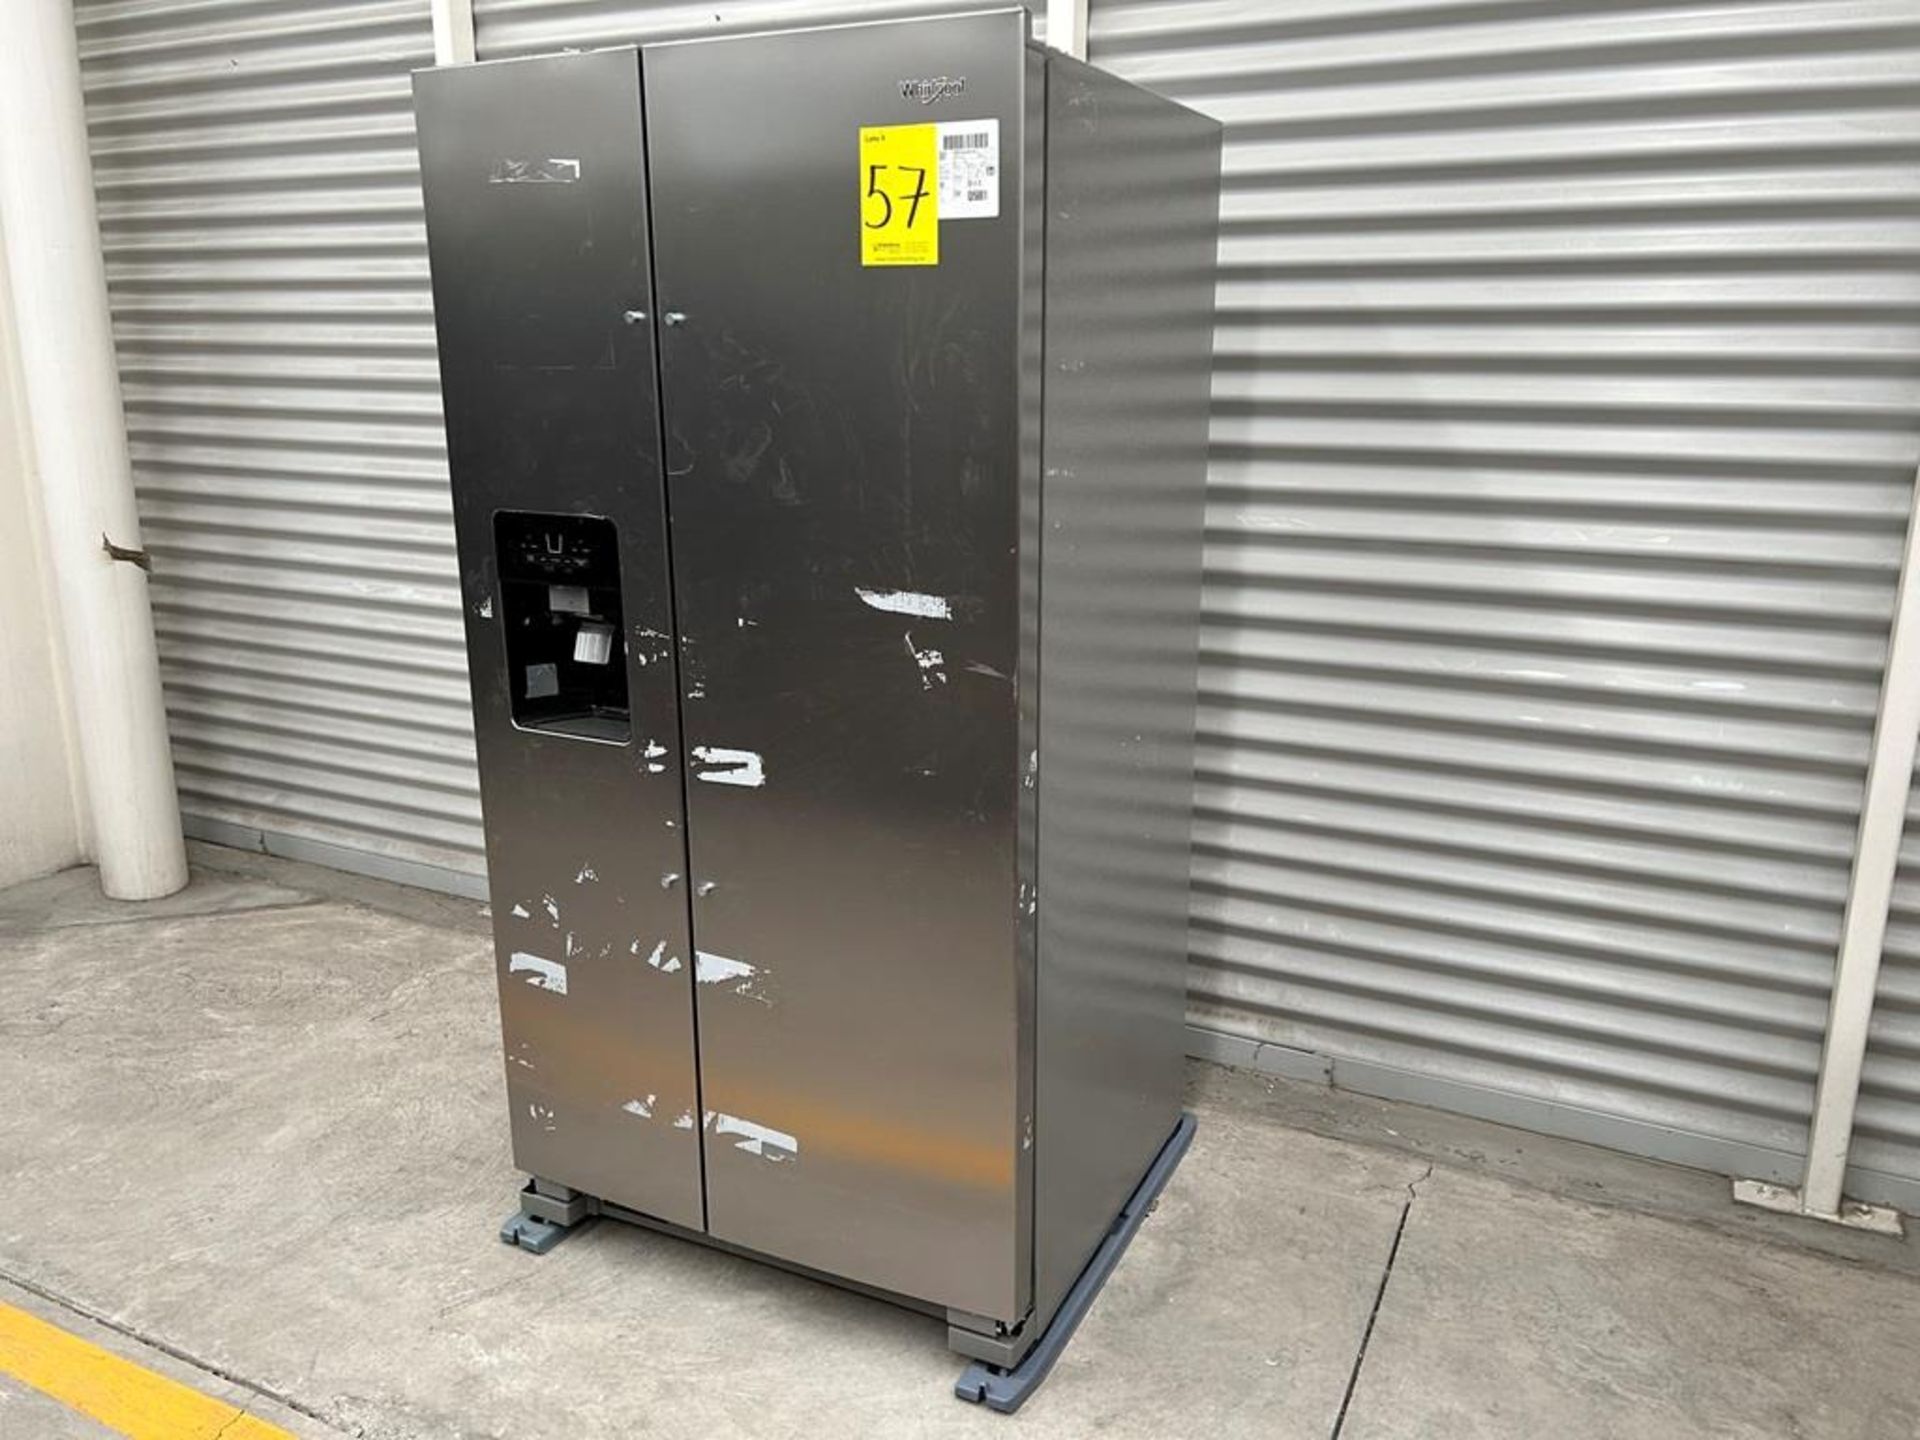 Refrigerador con dispensador de agua Marca WHIRPOOL, Modelo WD5720Z, Serie 25184, Color GRIS (Equip - Image 3 of 11